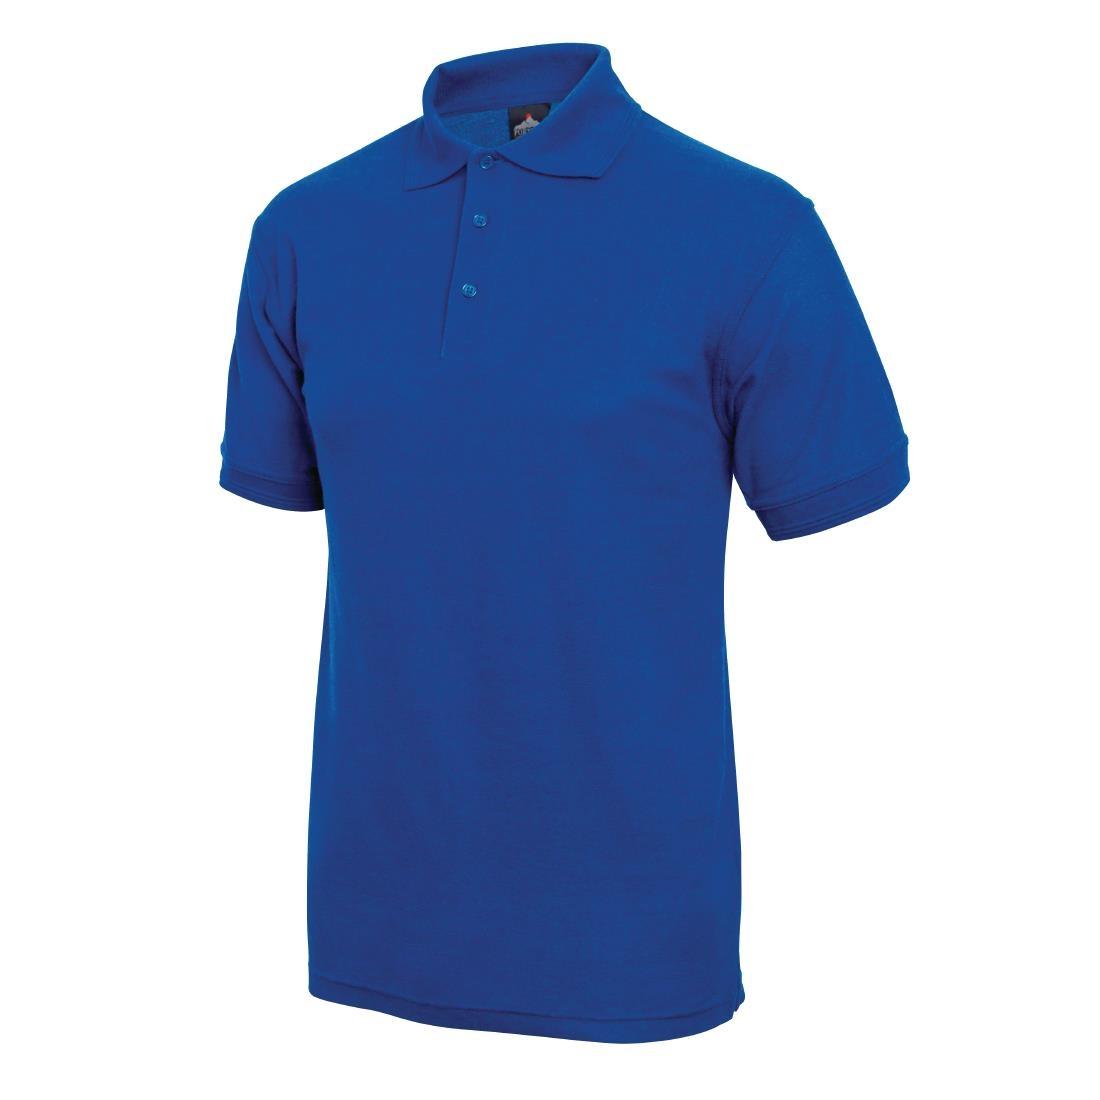 Unisex Polo Shirt Royal Blue S - A763-S  - 2